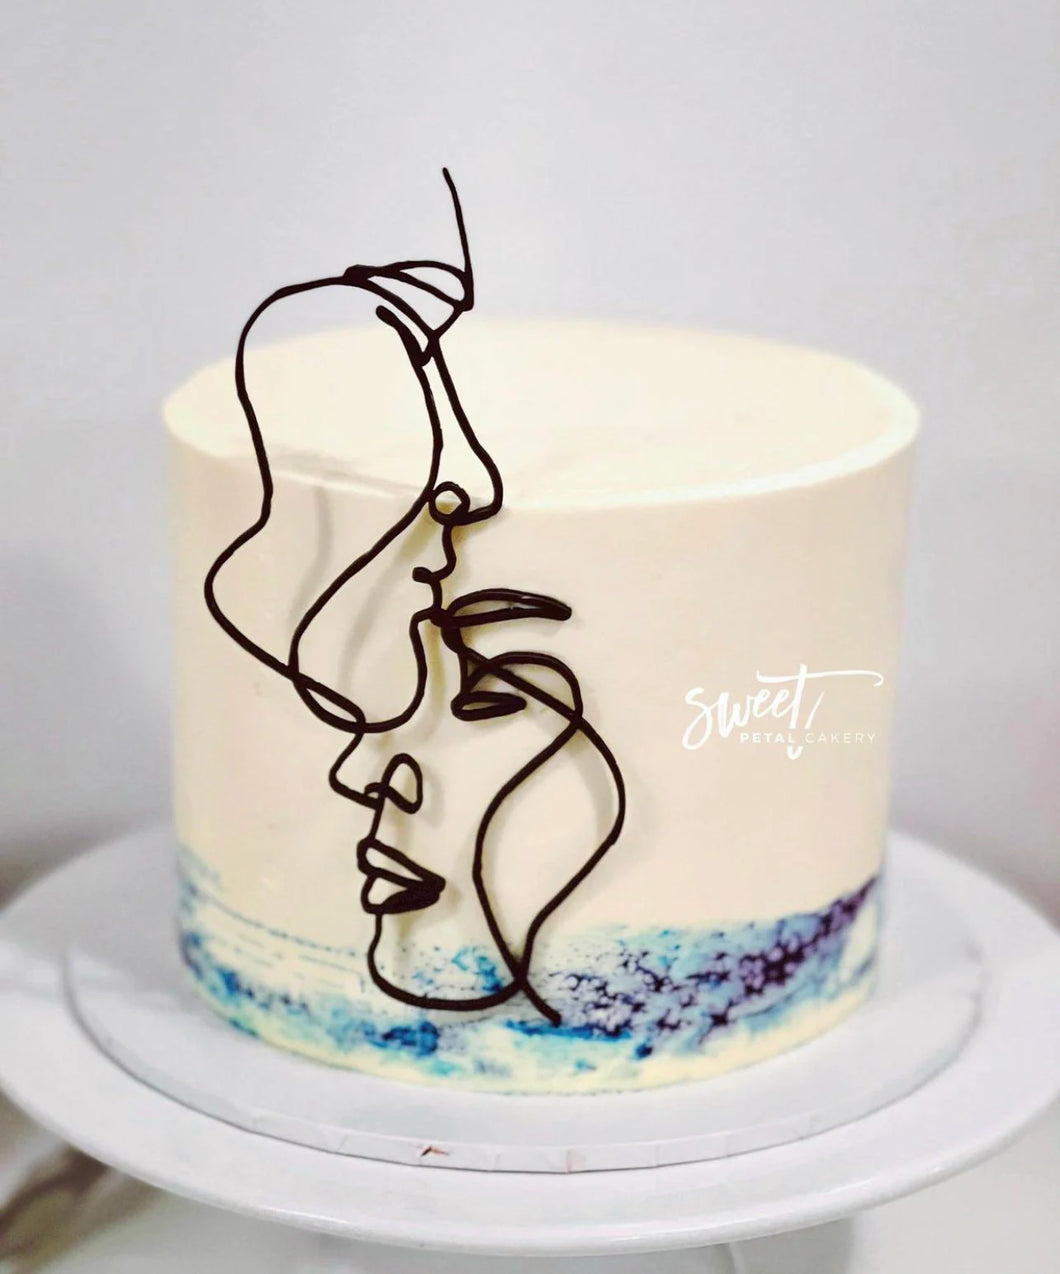 Line art cake decorations | wedding cake decorations | celebrating love cake topper